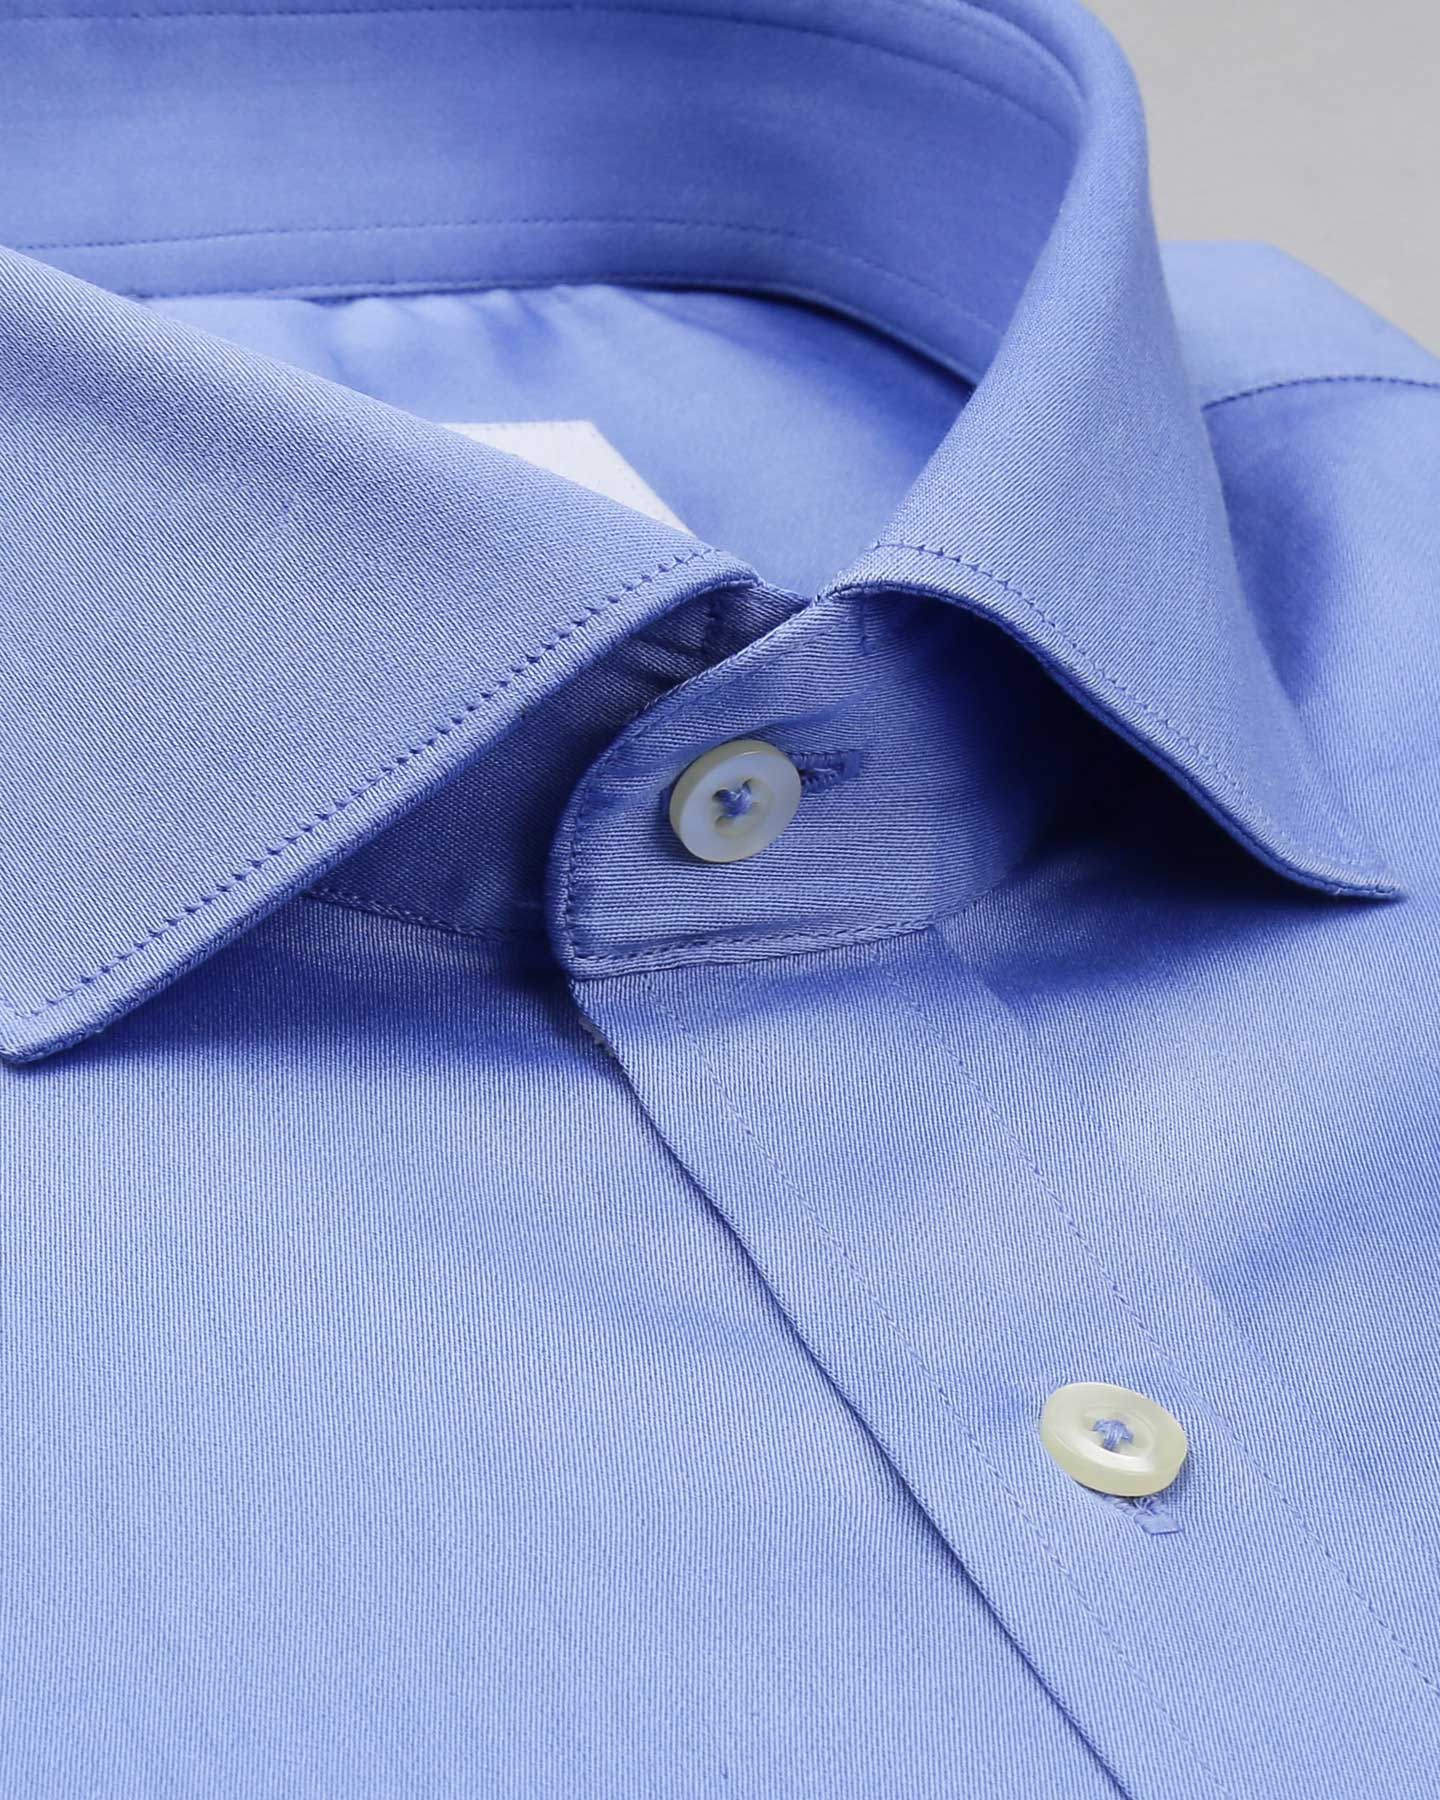 Bombay Shirt Company - Super Medium Blue Satin Shirt